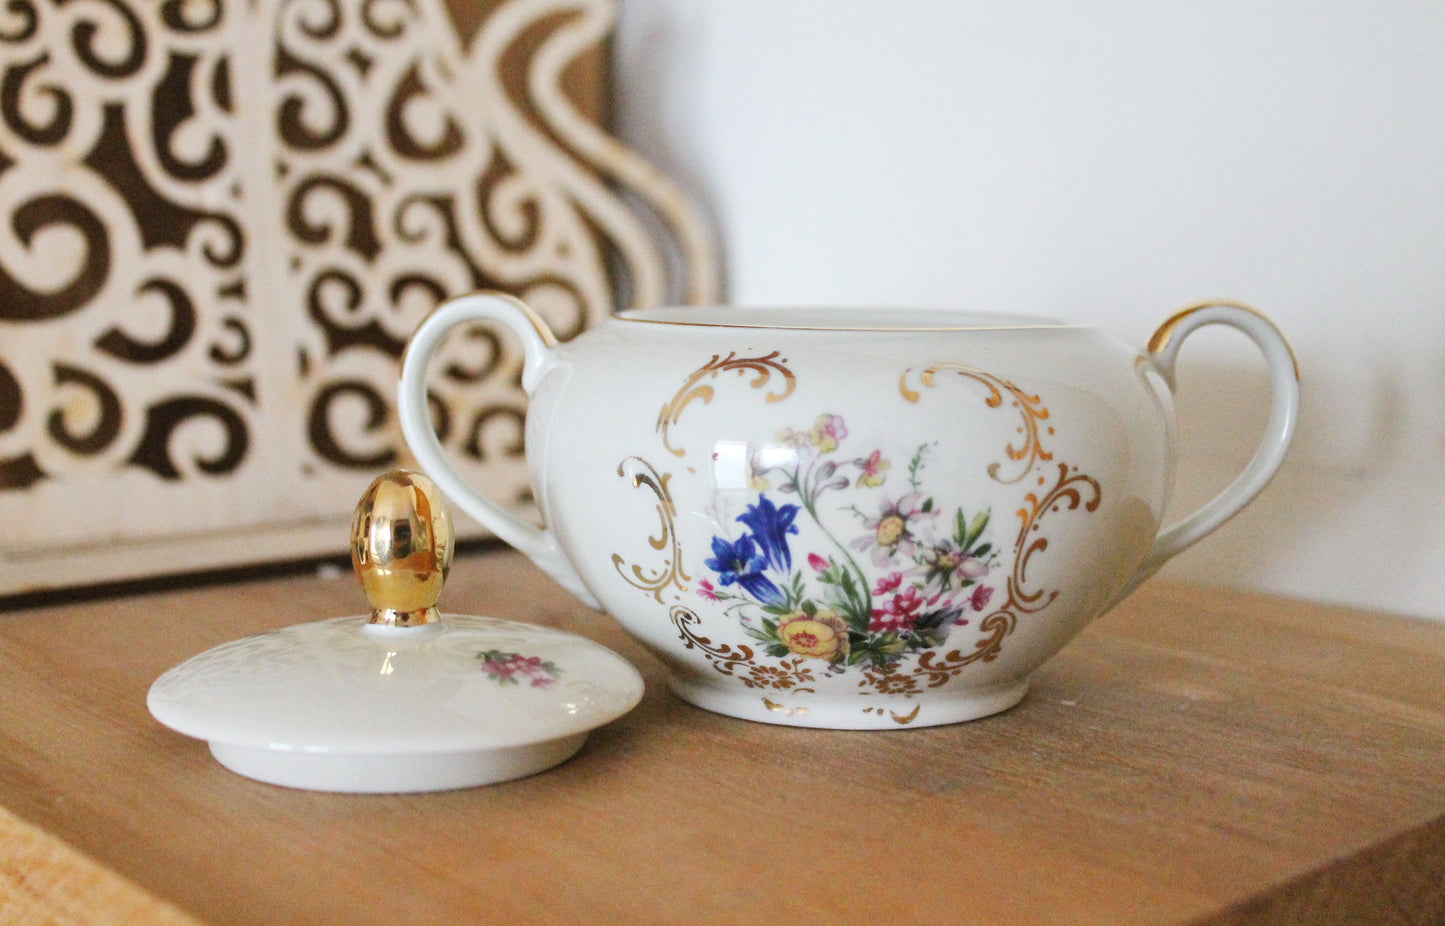 Vintage Germany ceramic sugar bowl with beautiful floral ornament - porcelain sugar bowl - 1970s